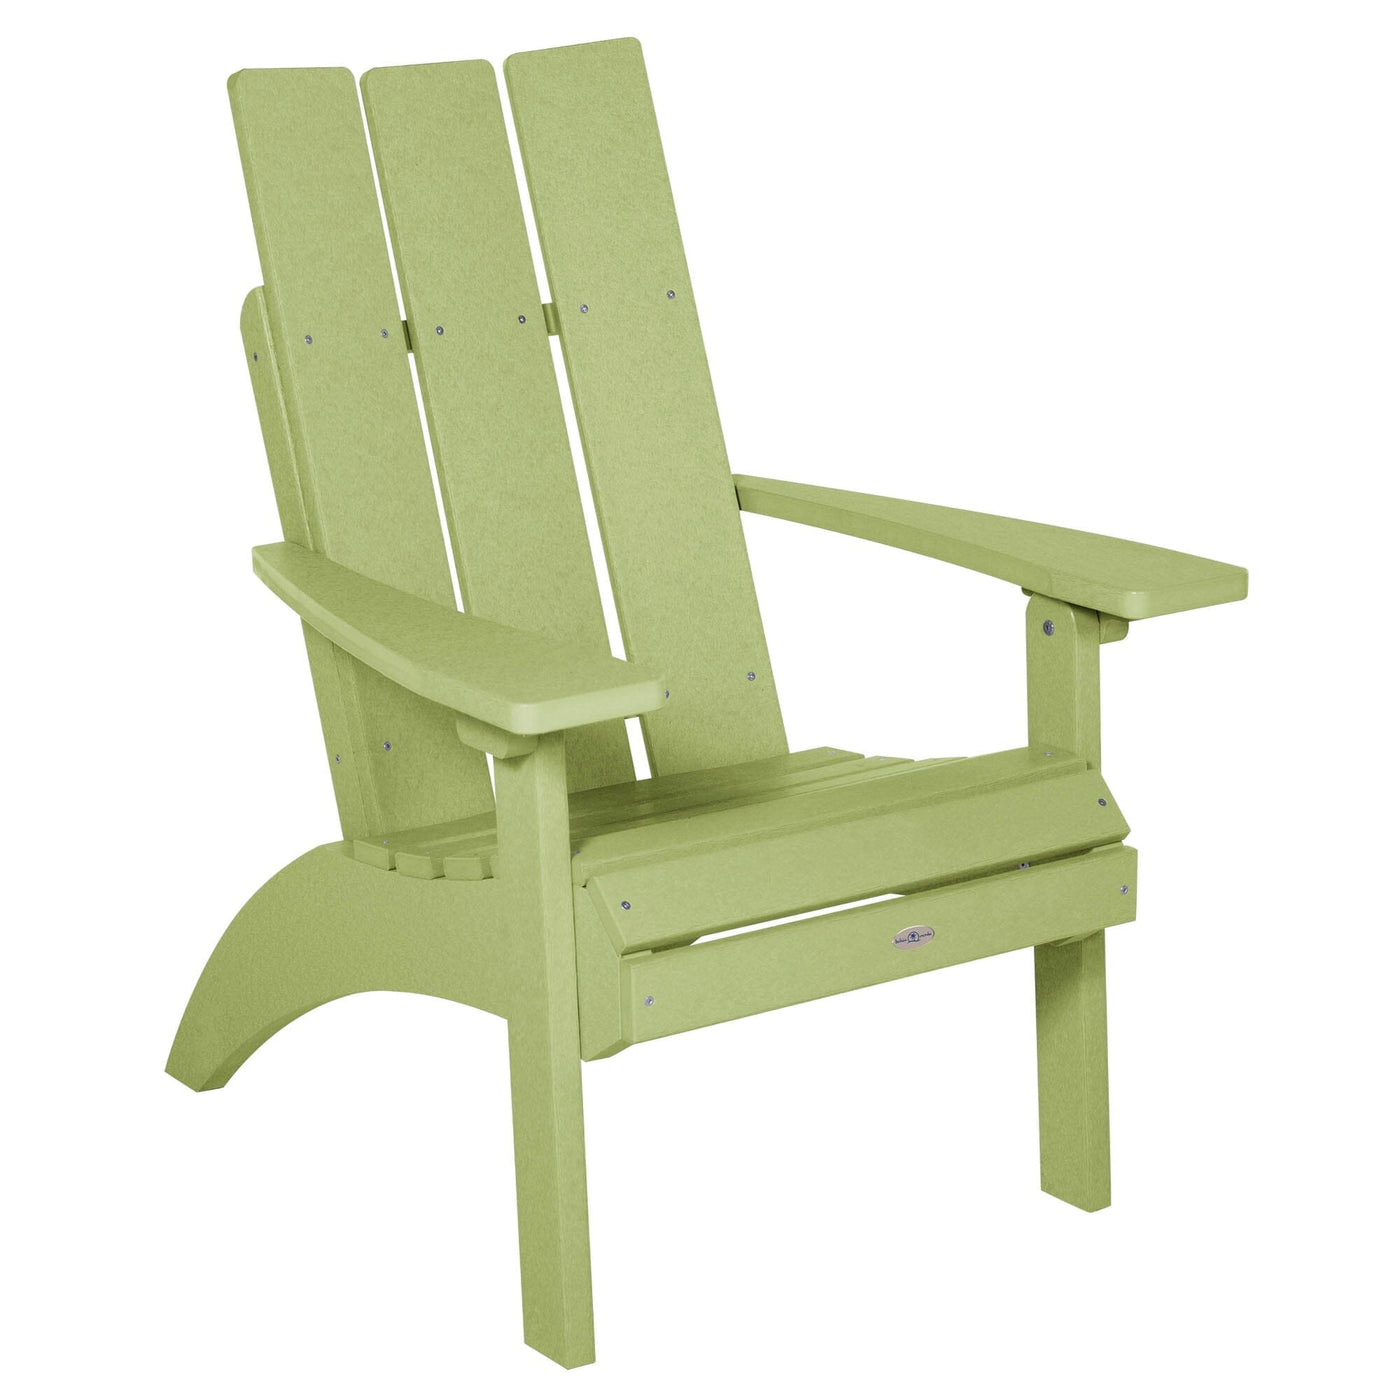 Corolla Comfort Height Adirondack Chair Chair Bahia Verde Outdoors Palm Green 